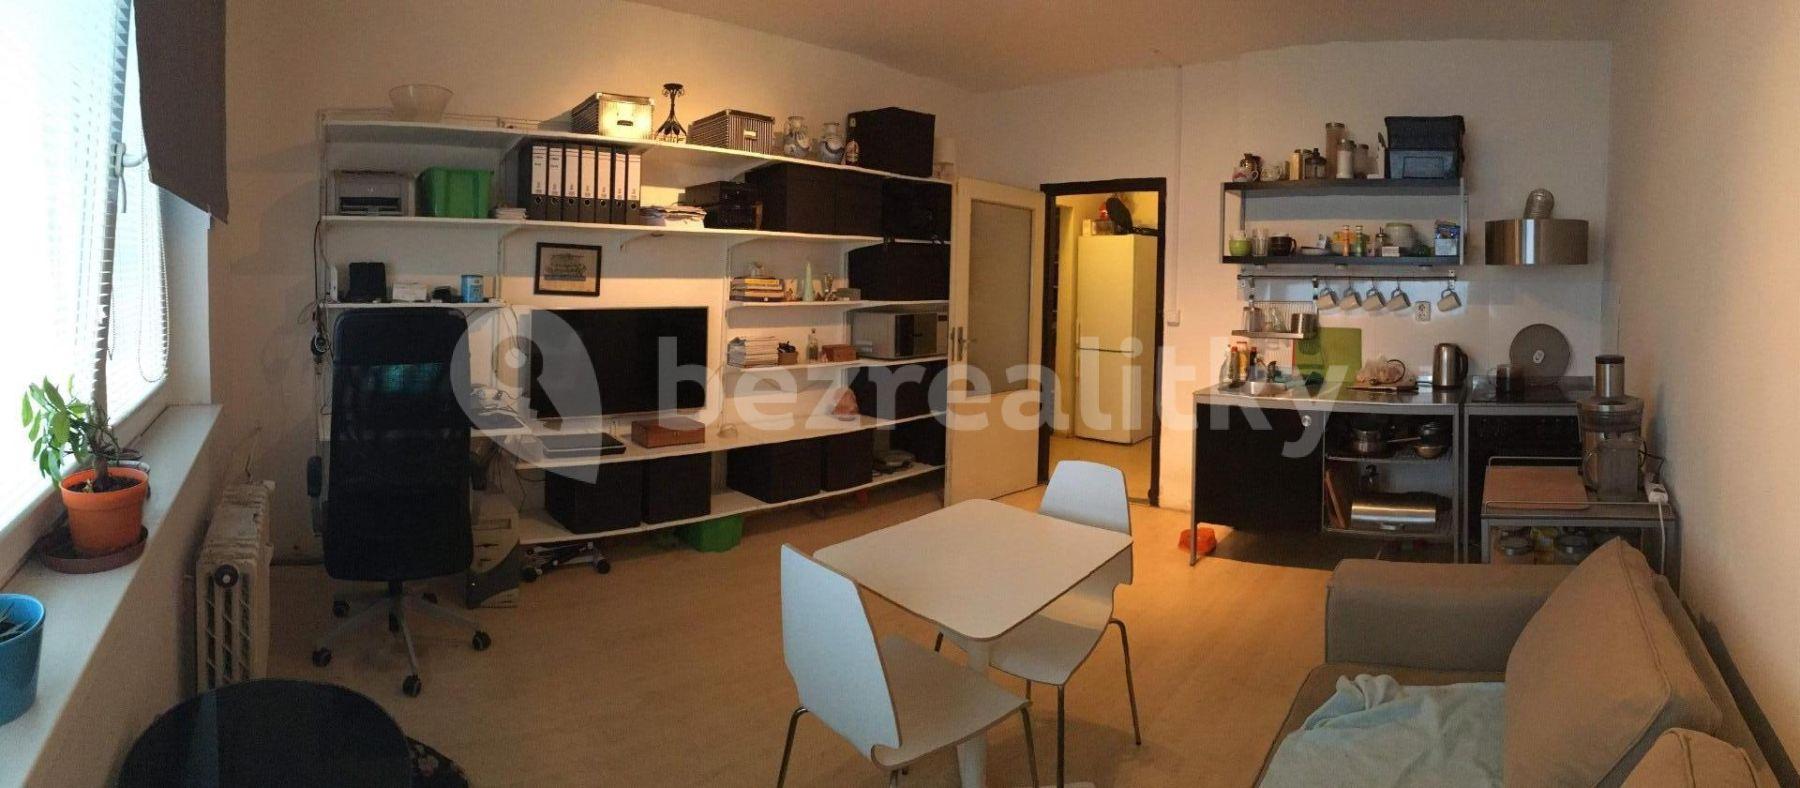 1 bedroom with open-plan kitchen flat for sale, 43 m², Brandtova, Ústí nad Labem, Ústecký Region